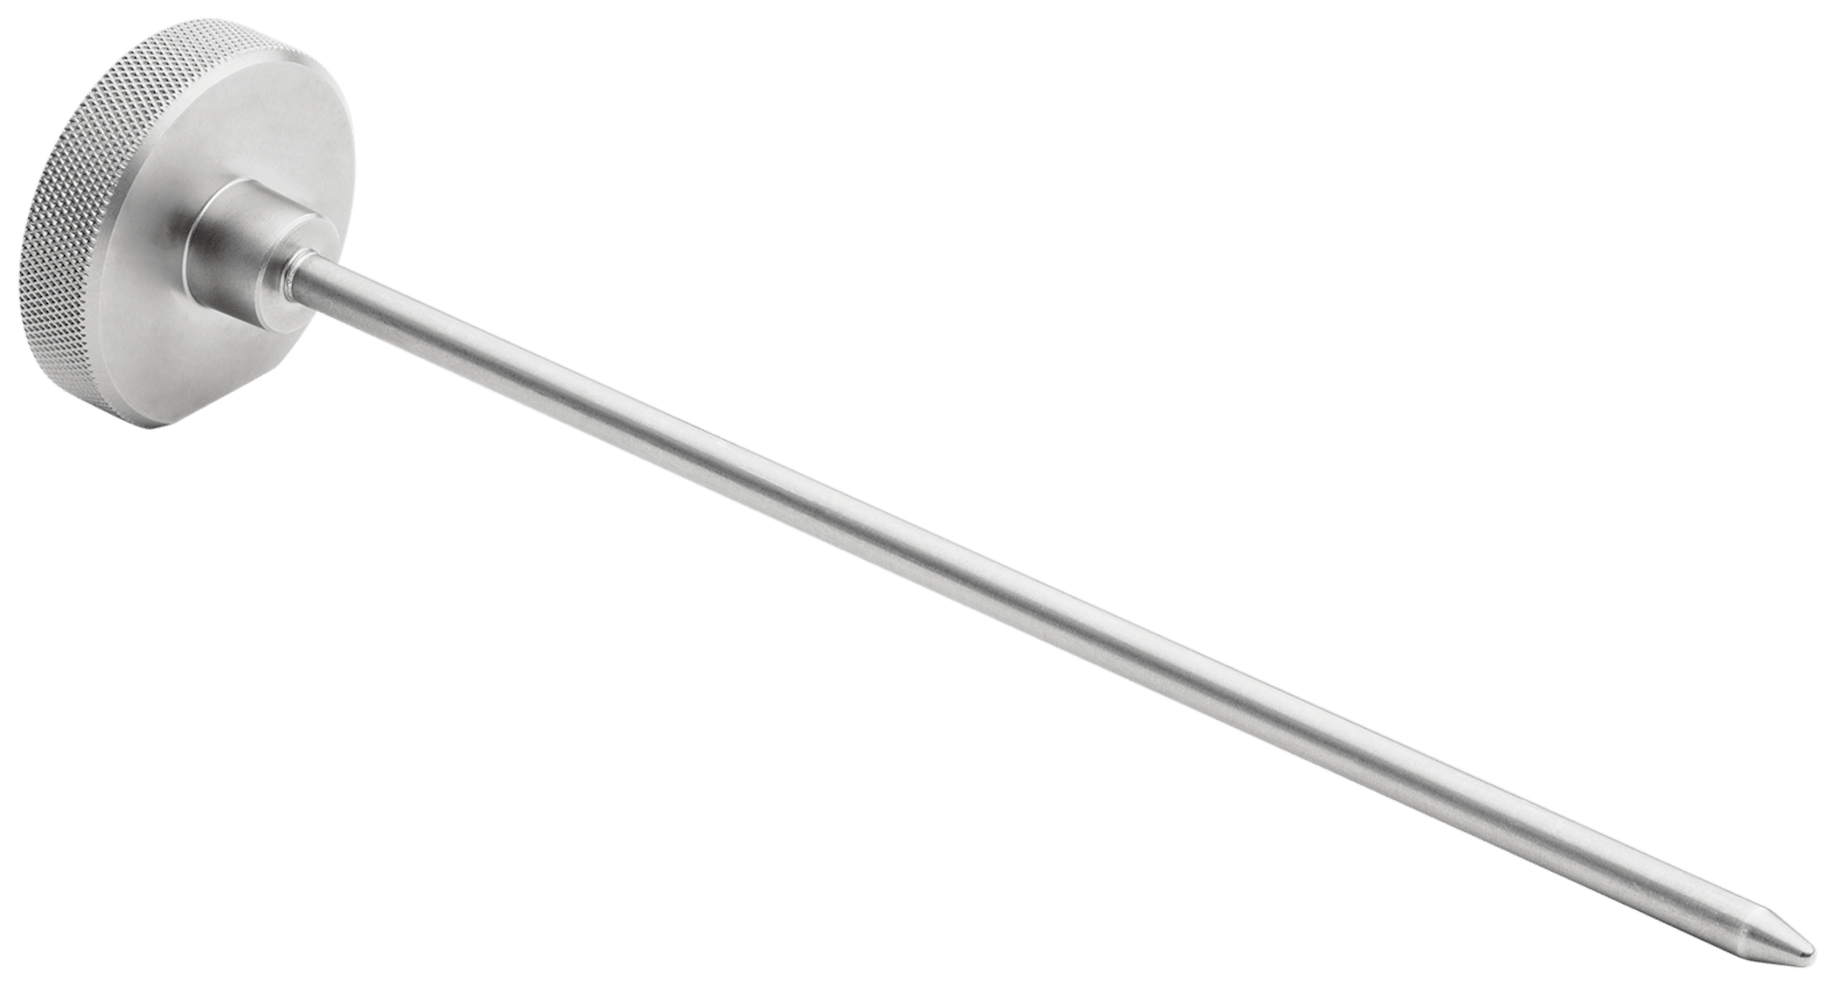 Blunt Obturator for 3.0 mm Metal Cannula